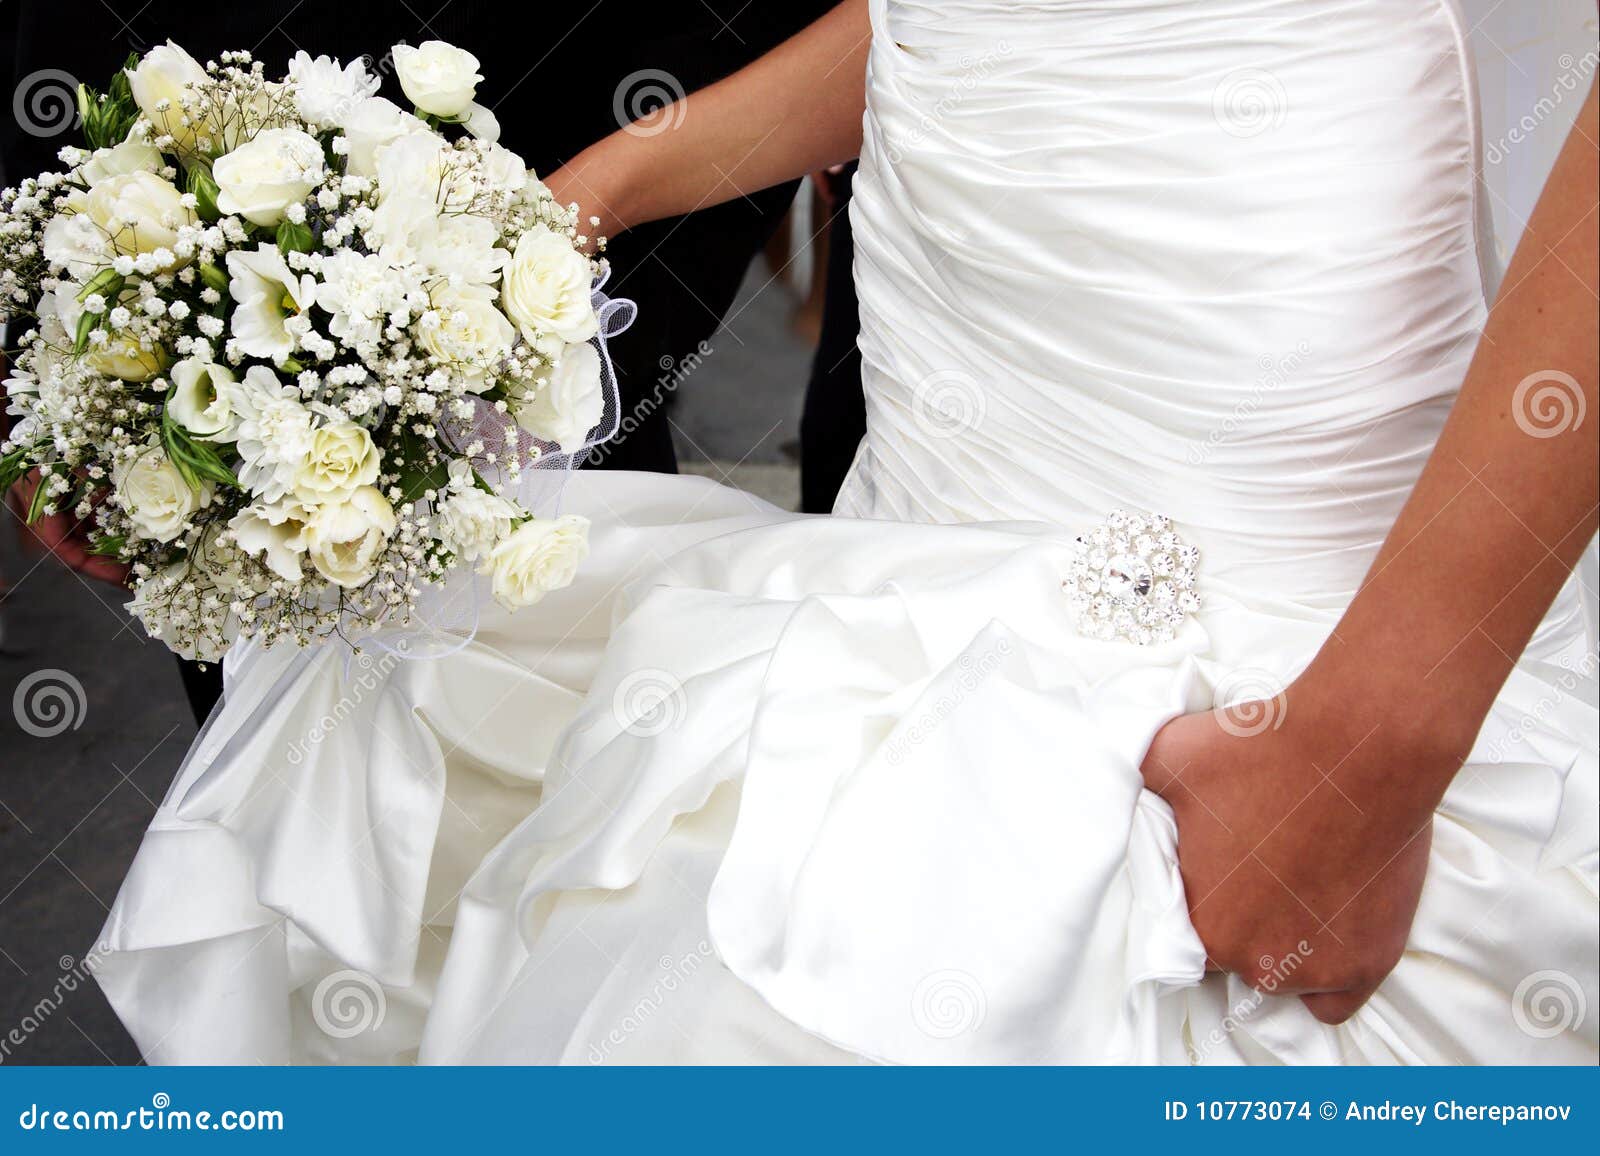 Wedding bouquet stock photo. Image of decoration, human - 10773074